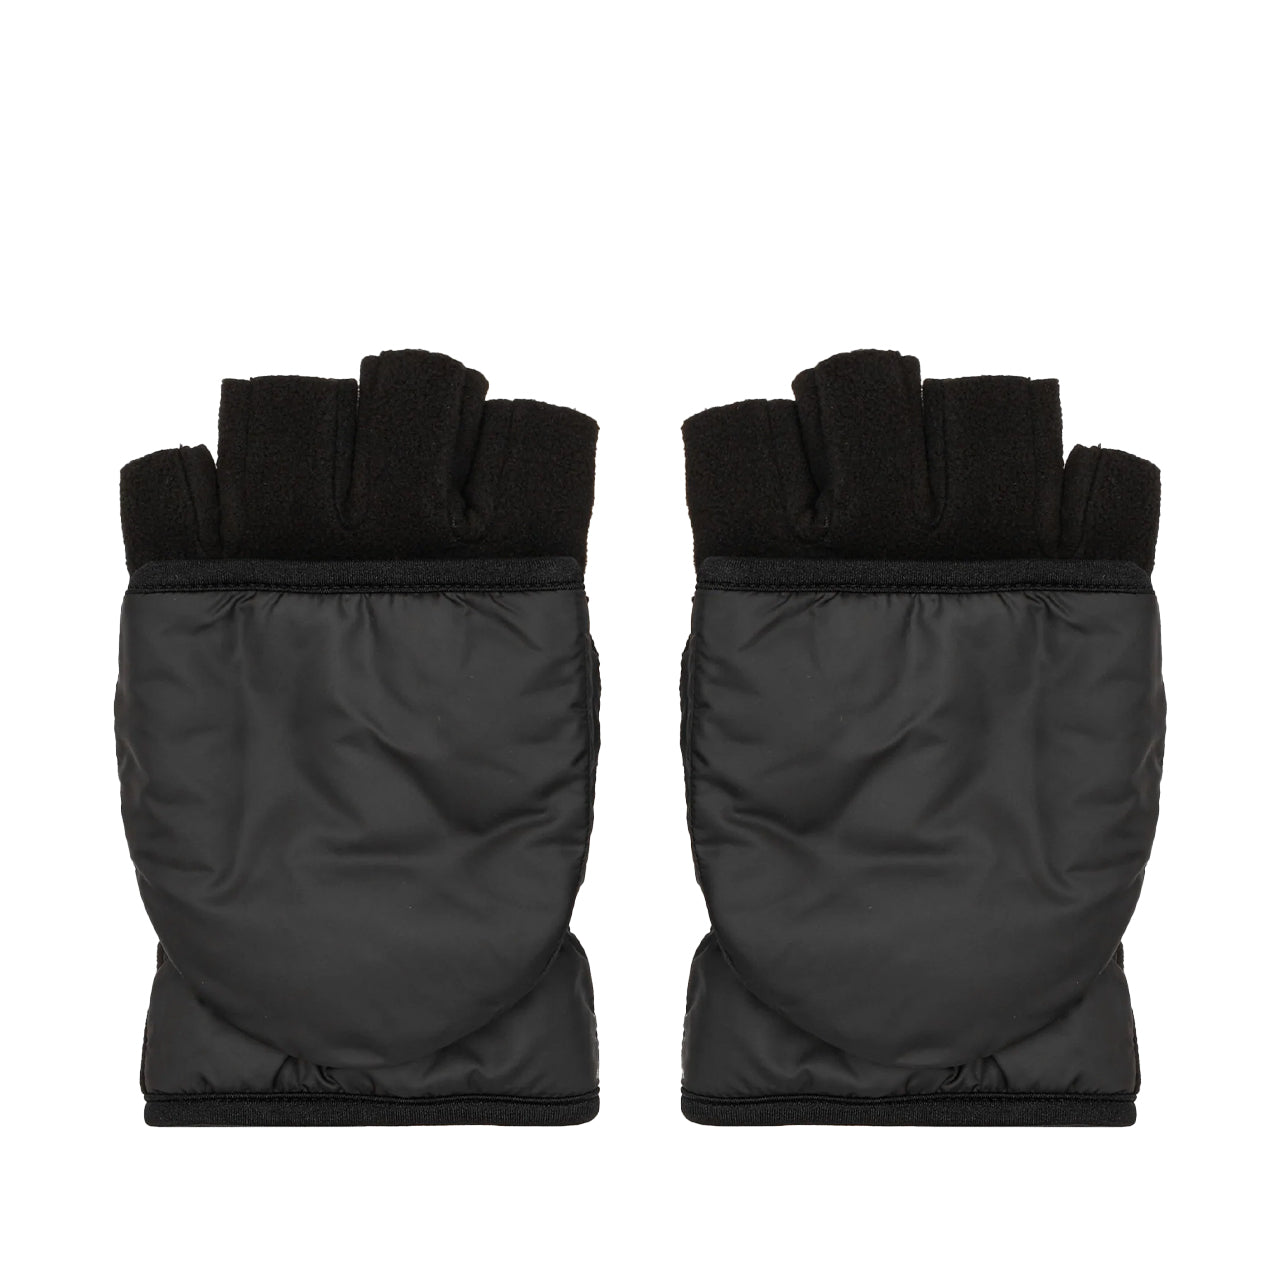 undercover gloves (black)